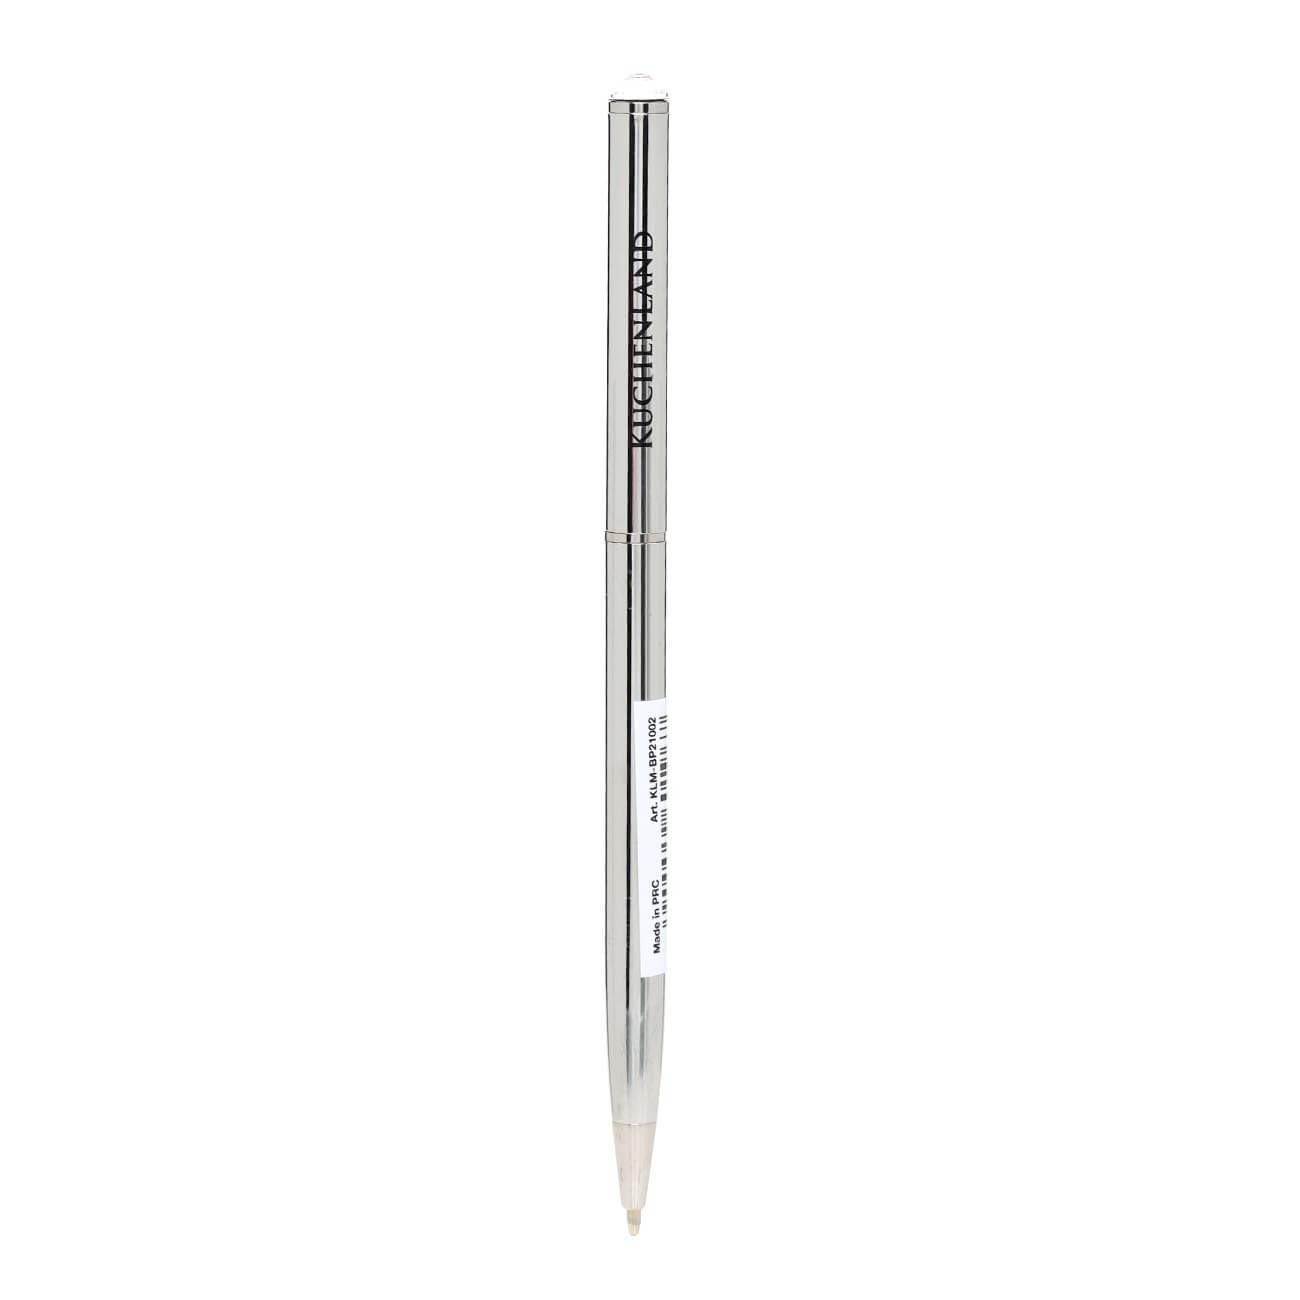 Ручка шариковая, 13 см, с кристаллом, металл, серебристая, Draw ручка шариковая 13 см с кристаллом металл серебристая draw